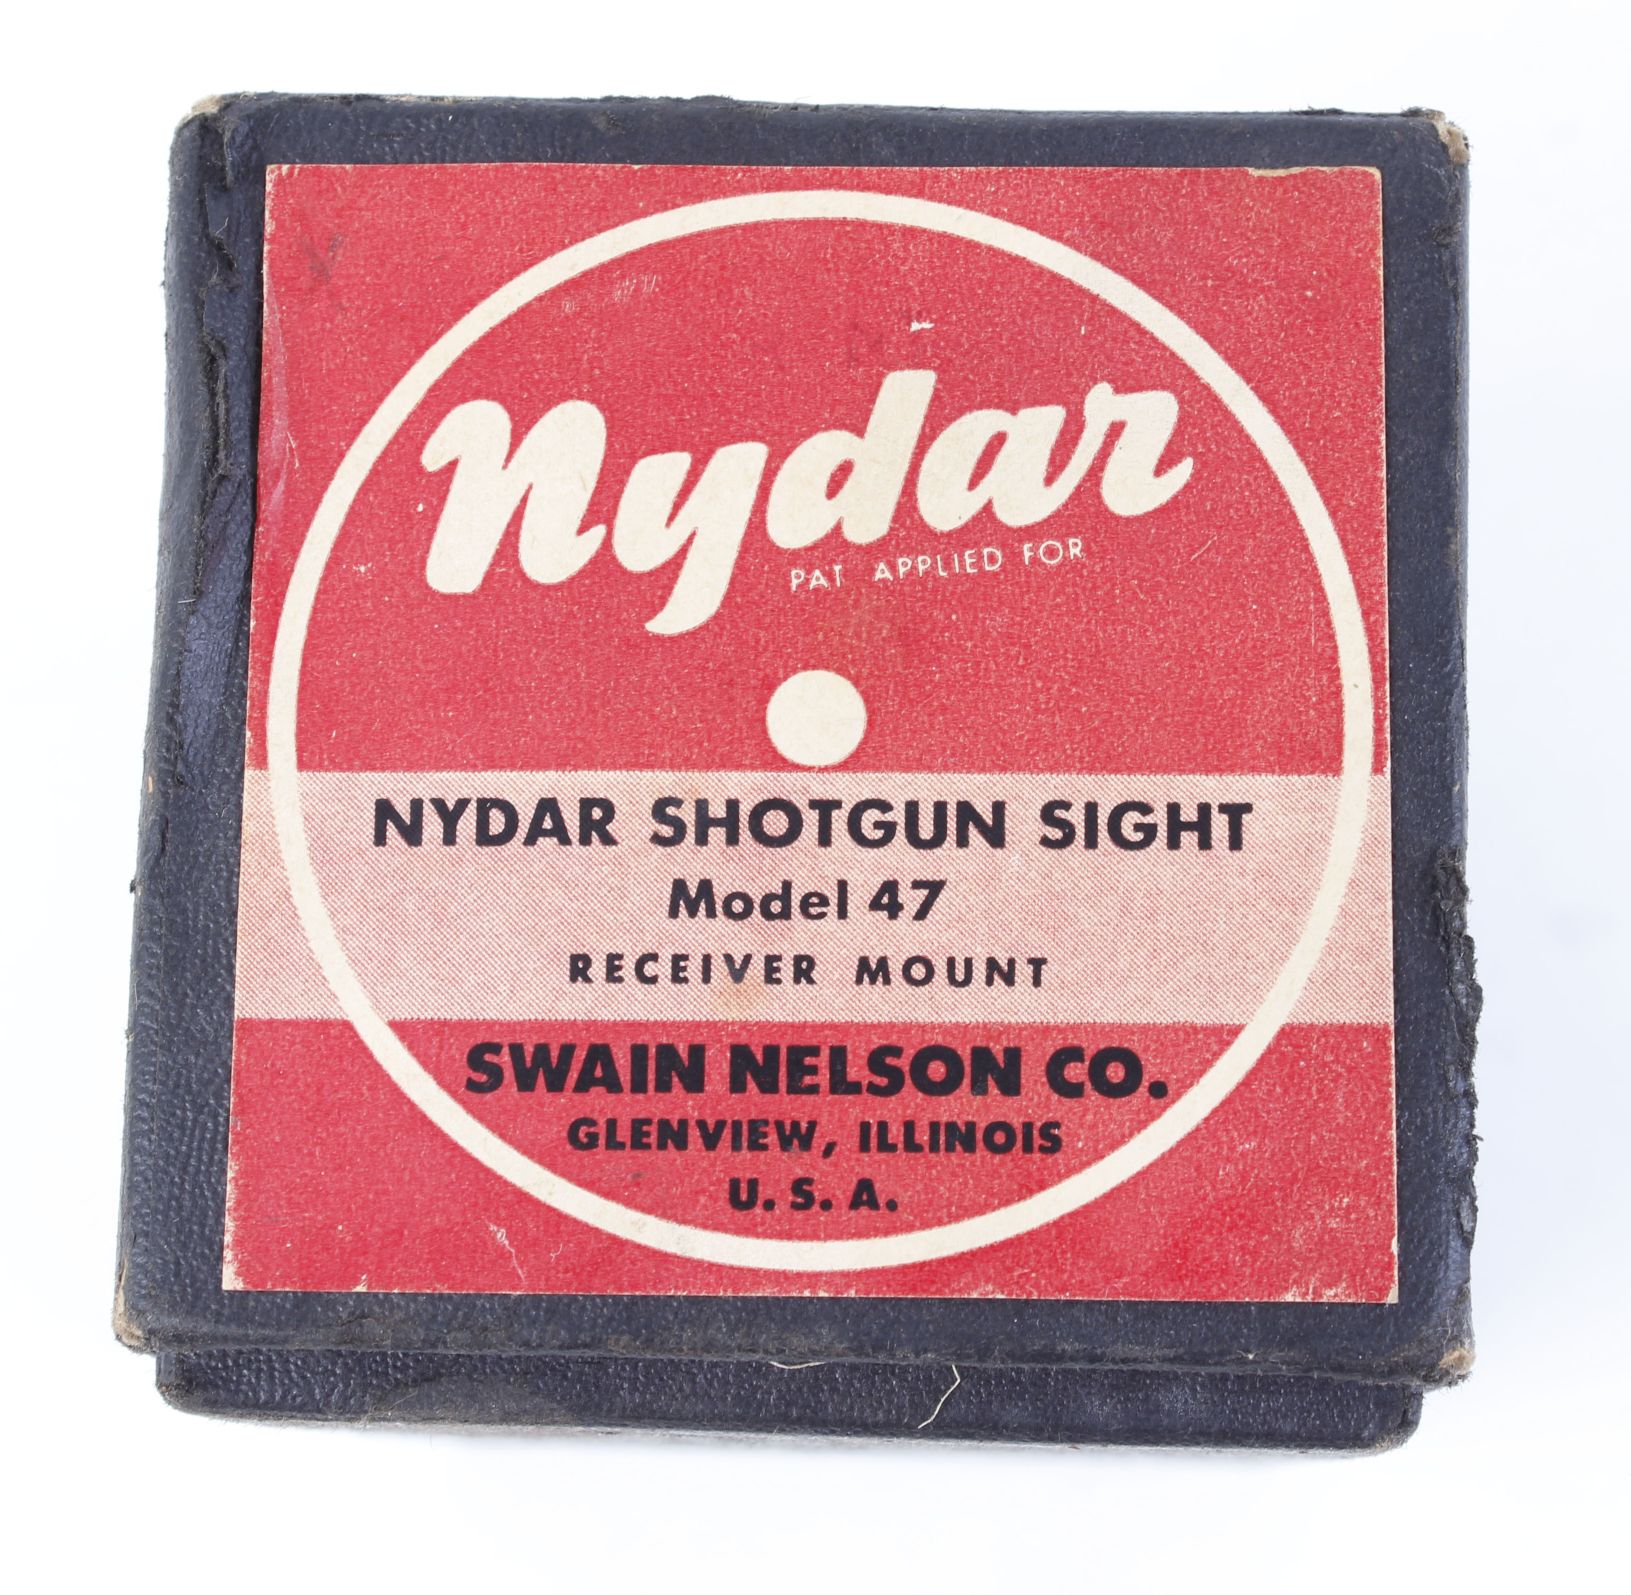 Boxed Nydar Model 47 shotgun sight - Image 5 of 5